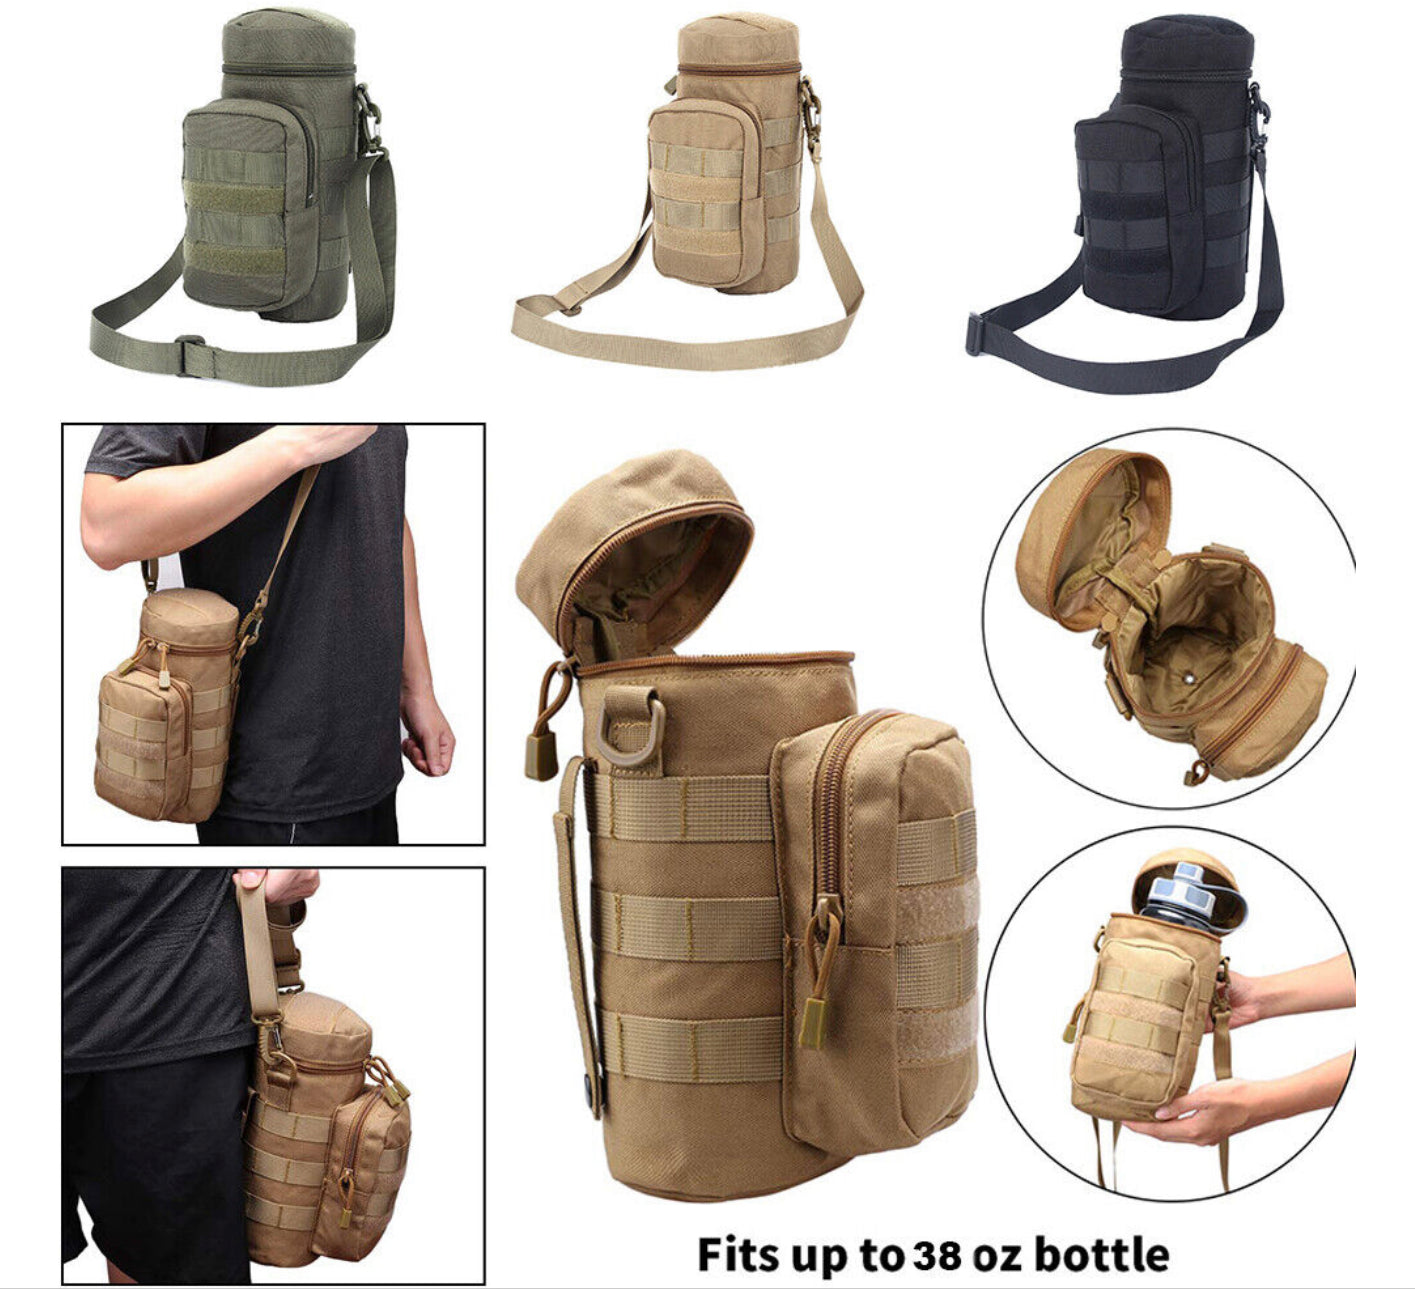 Tactical Military Molle Kettle Pouch Water Bottle Holder Bag with Shoulder Strap - Badger Survival 